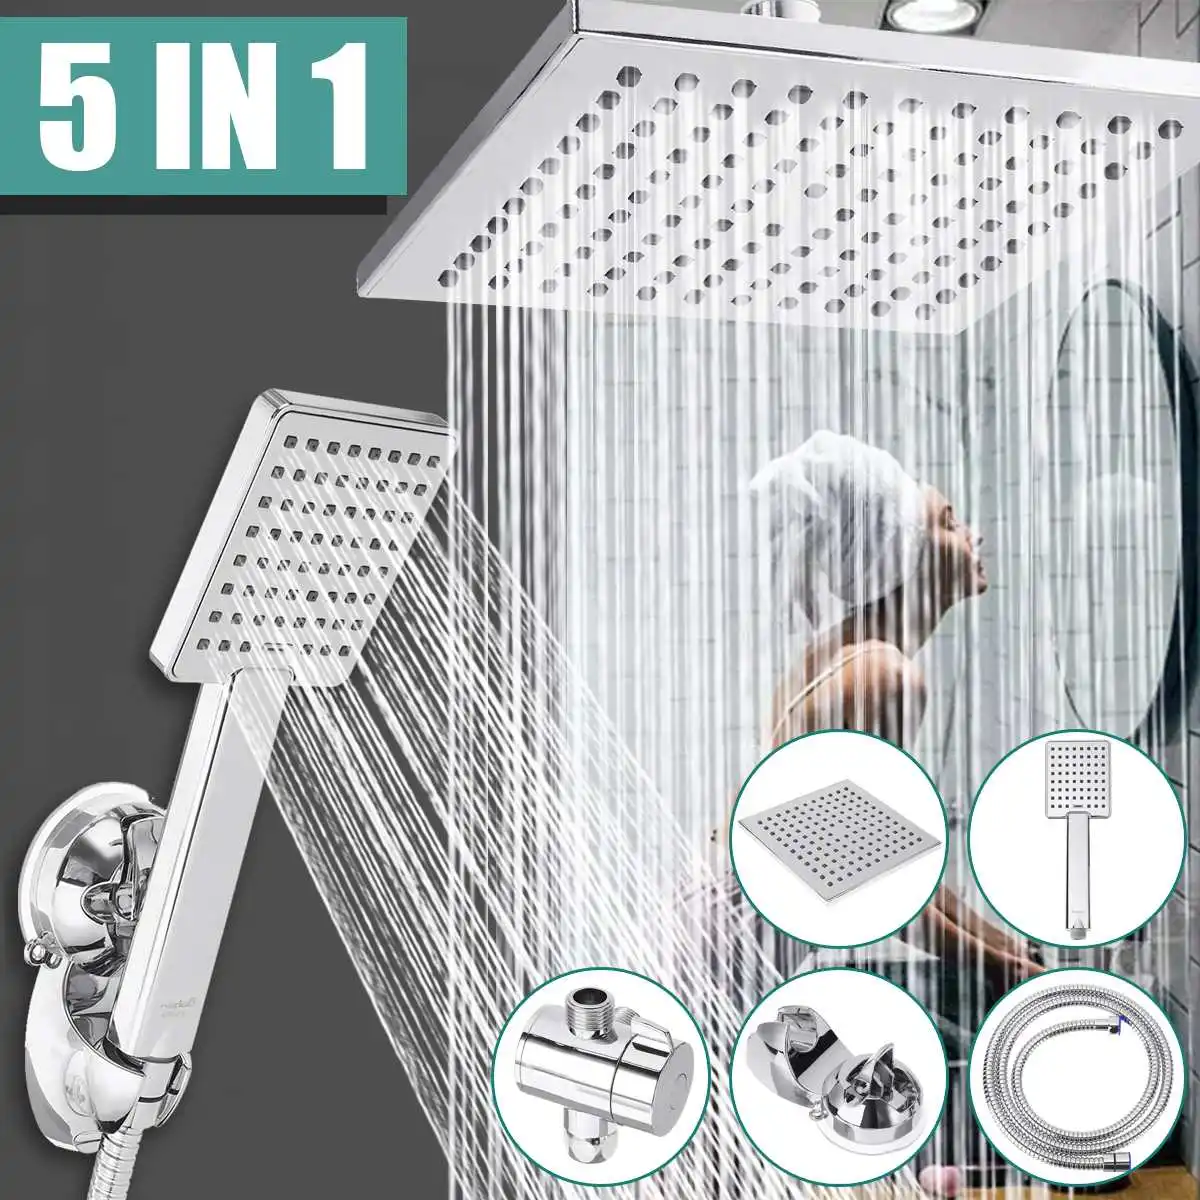 

8 inch Detachable Bathroom Shower Head Set Rainfall Handheld High Pressure Saving Water Shower Head 5 In 1 Spray Modes Sliver